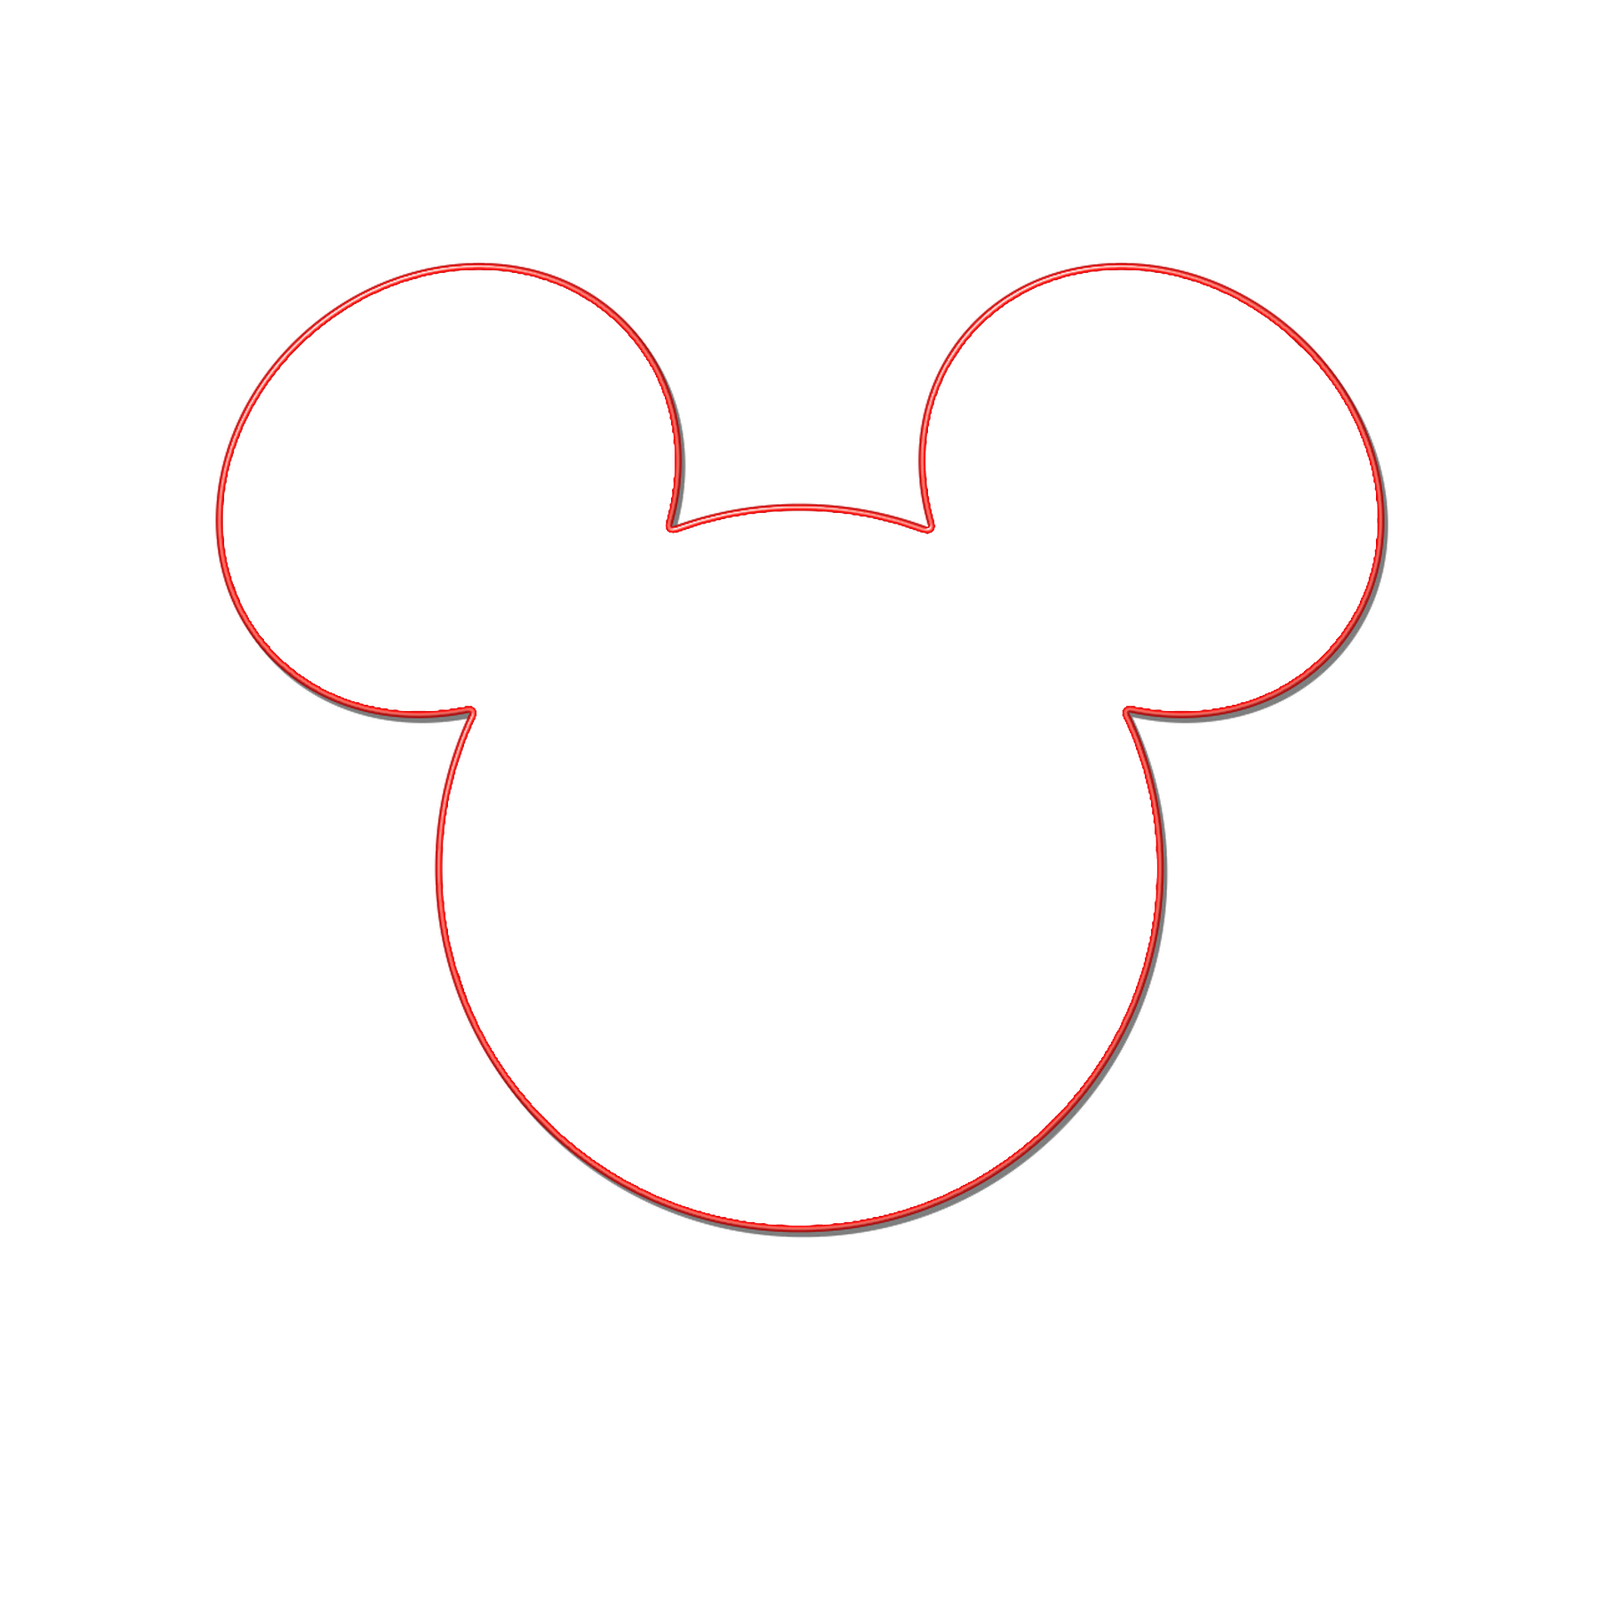 Mickey Mouse Head Stencil